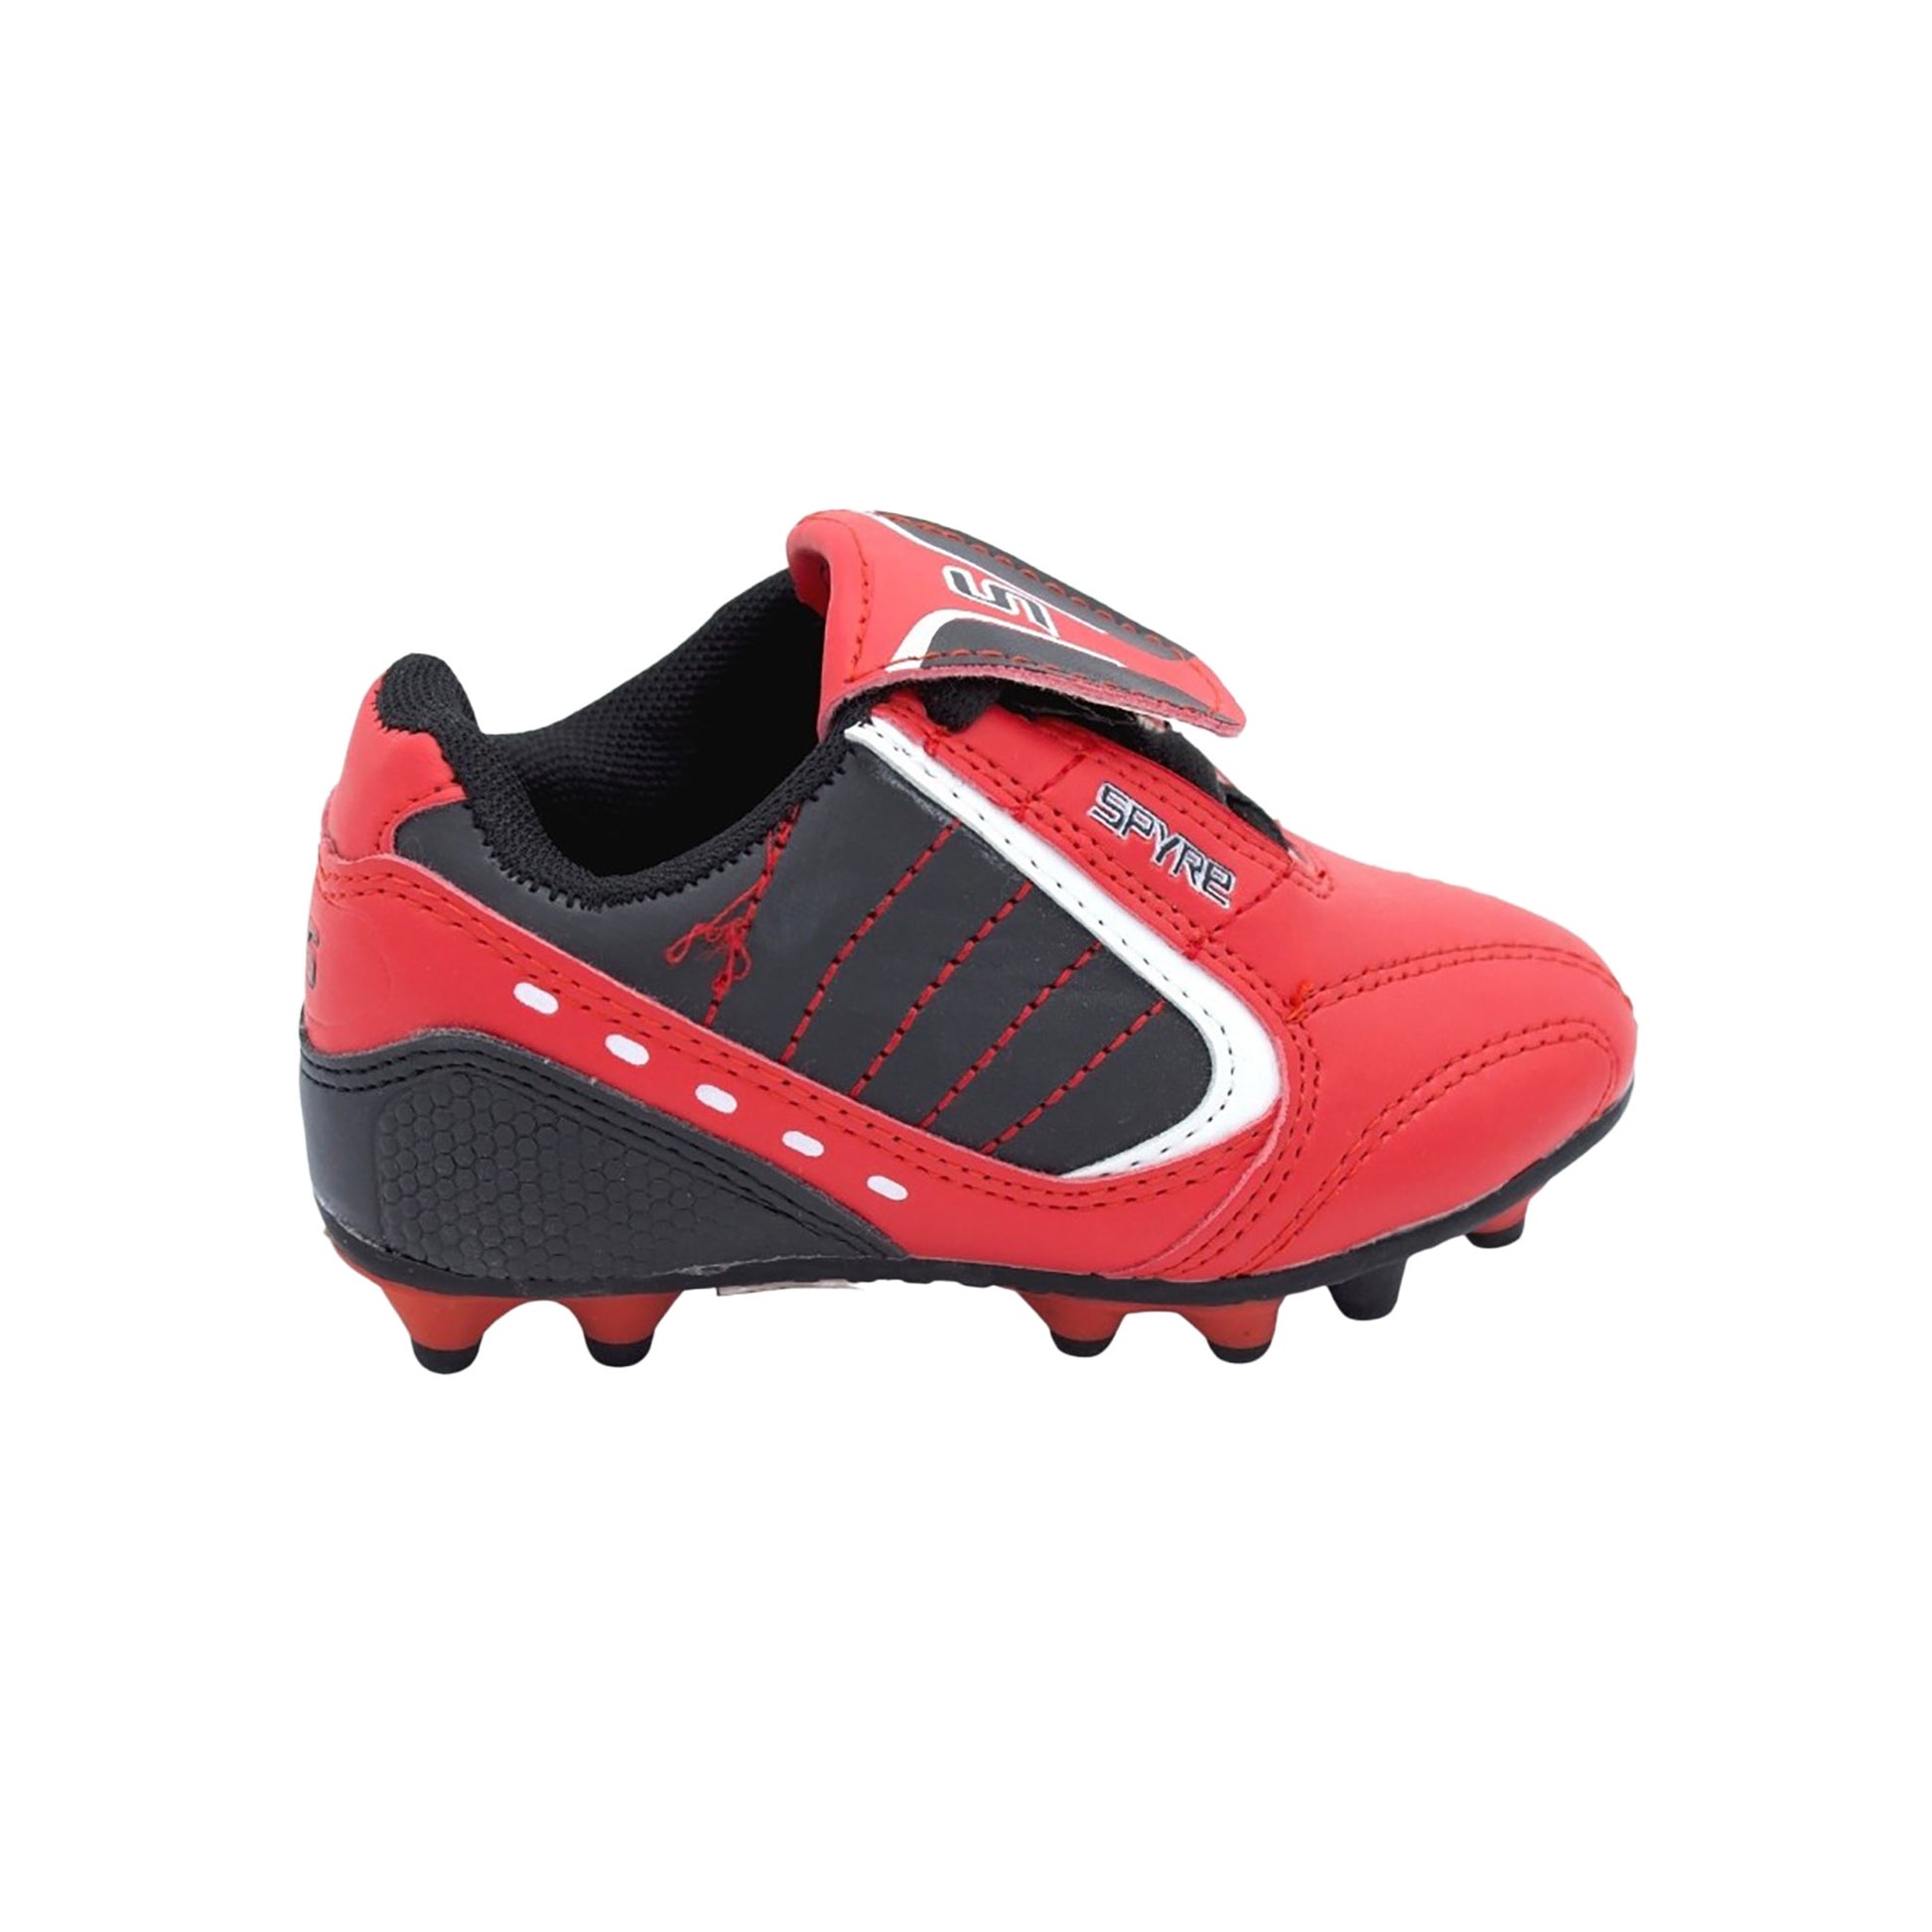 Speedstar Junior Turf Soccer Shoes | EvangelistaSports.com | Canada's Premiere Soccer Store